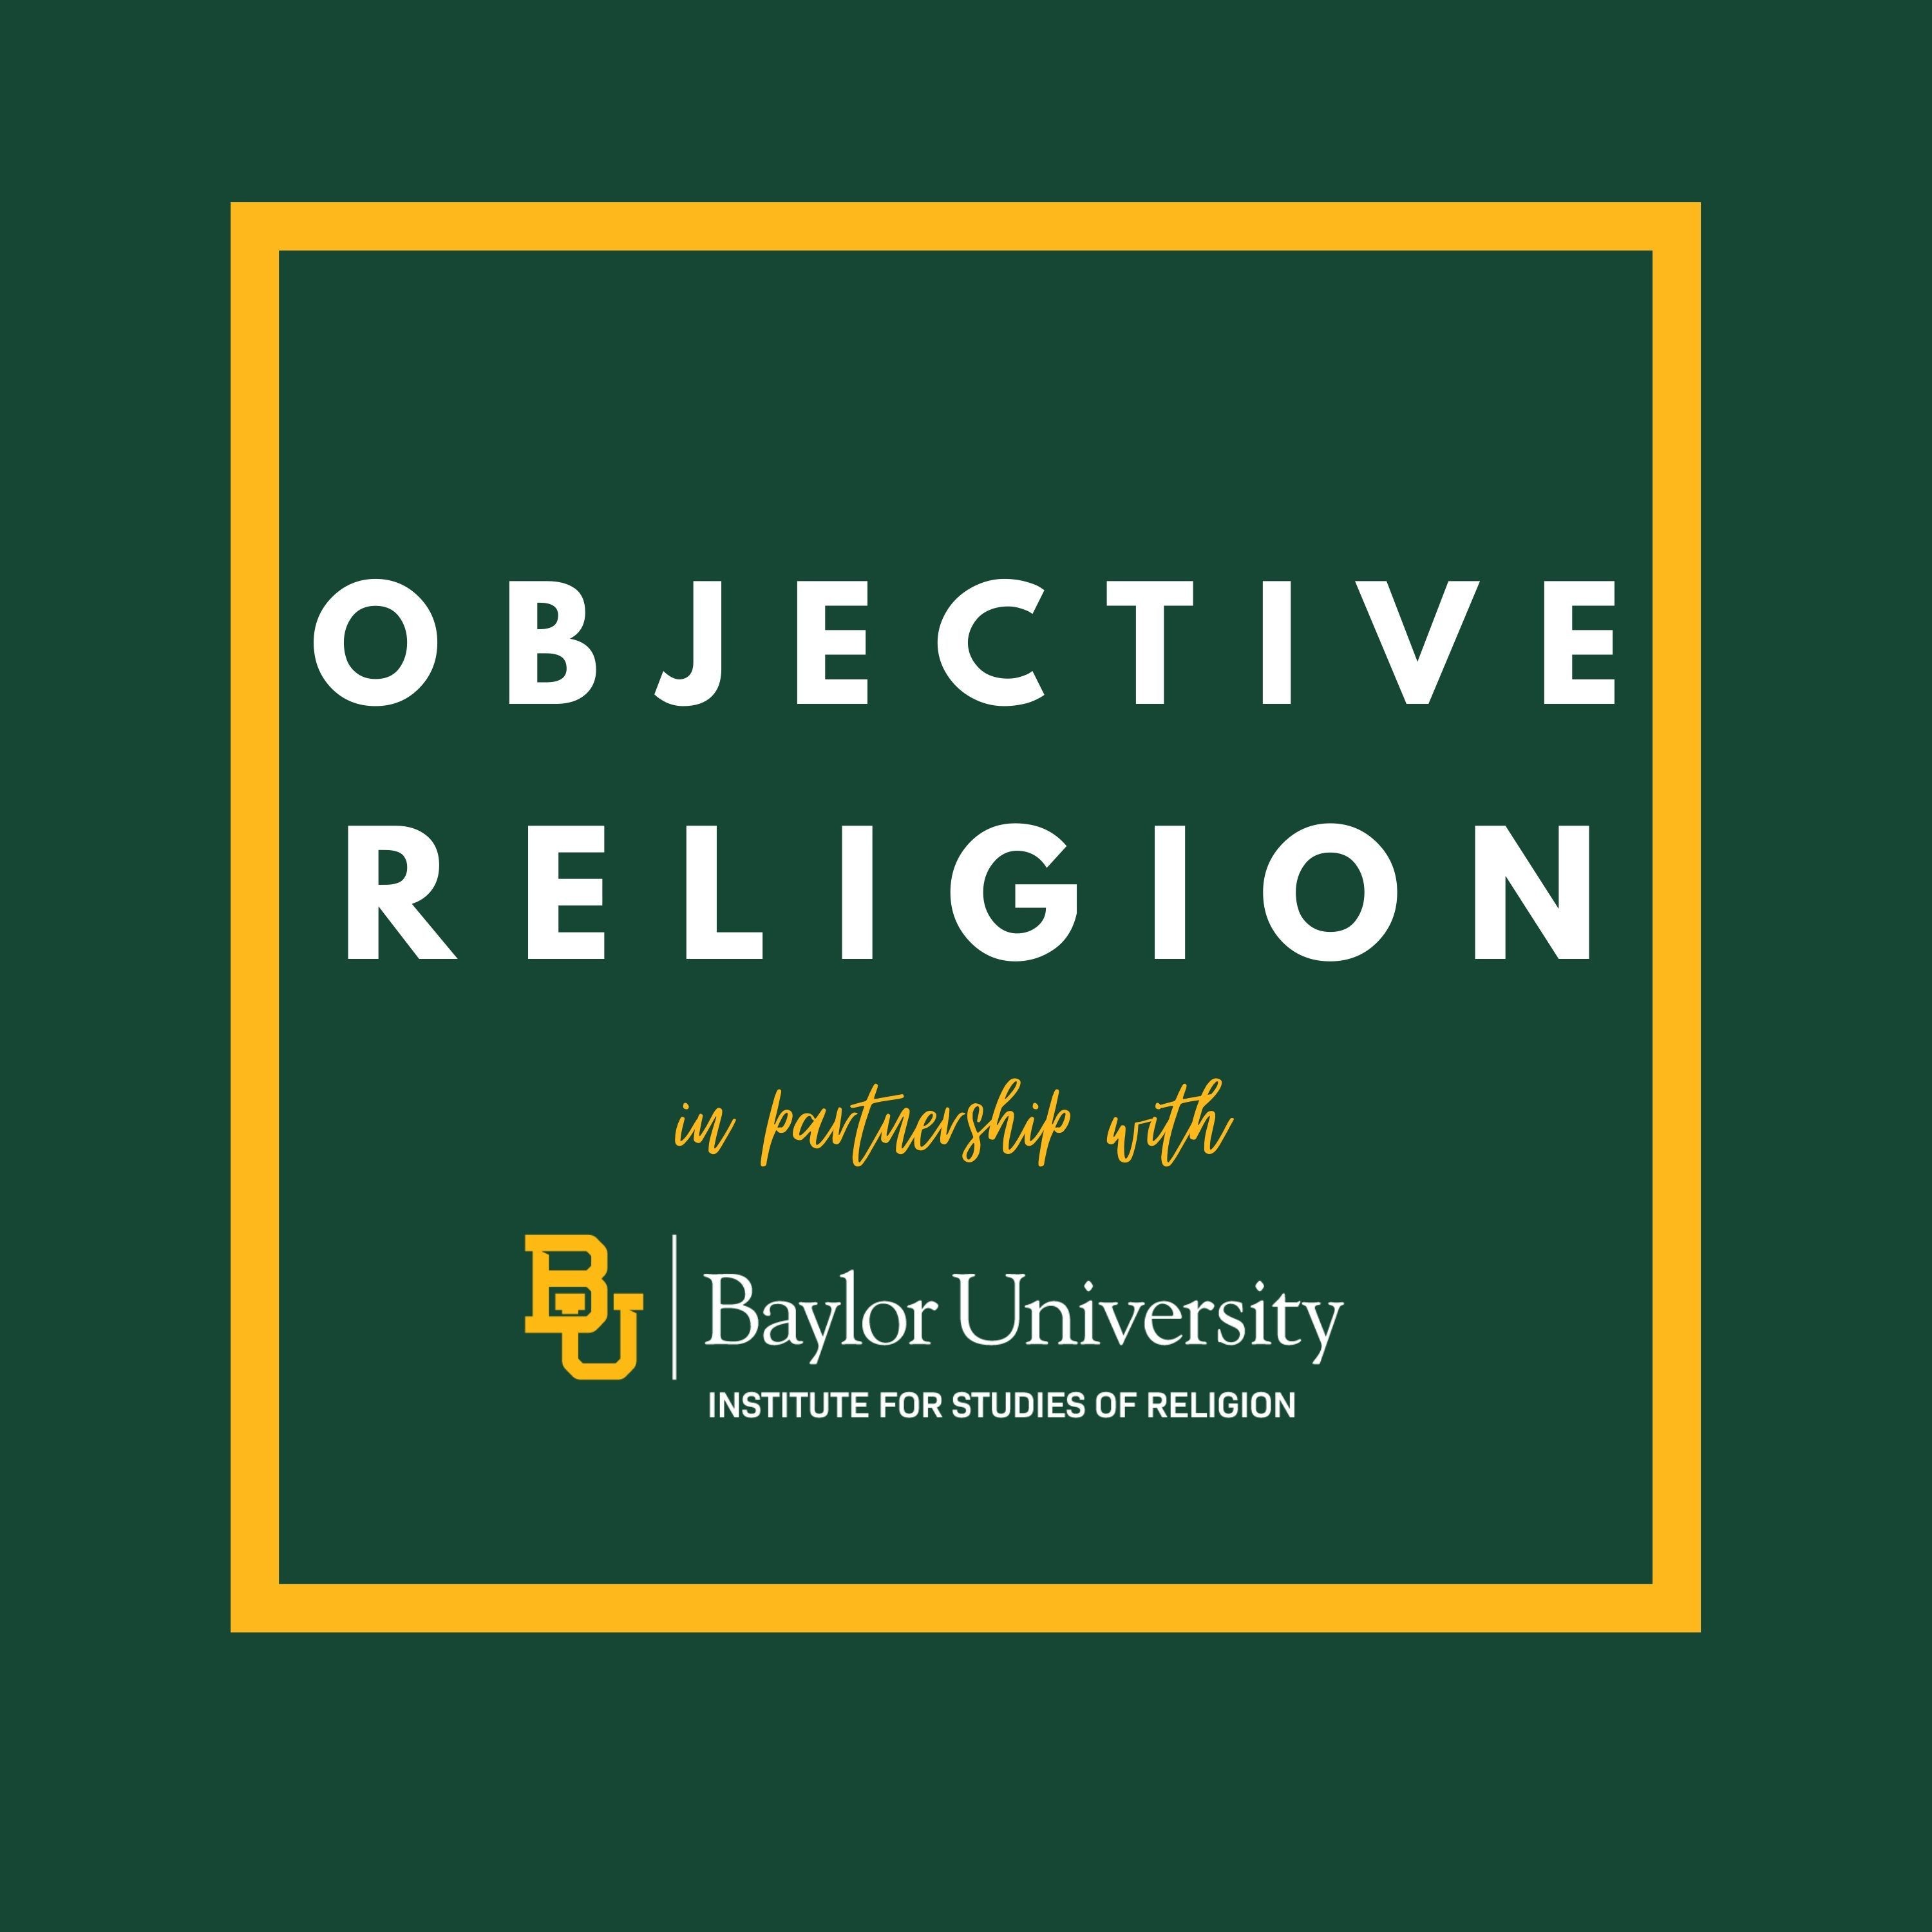 Objective Religion